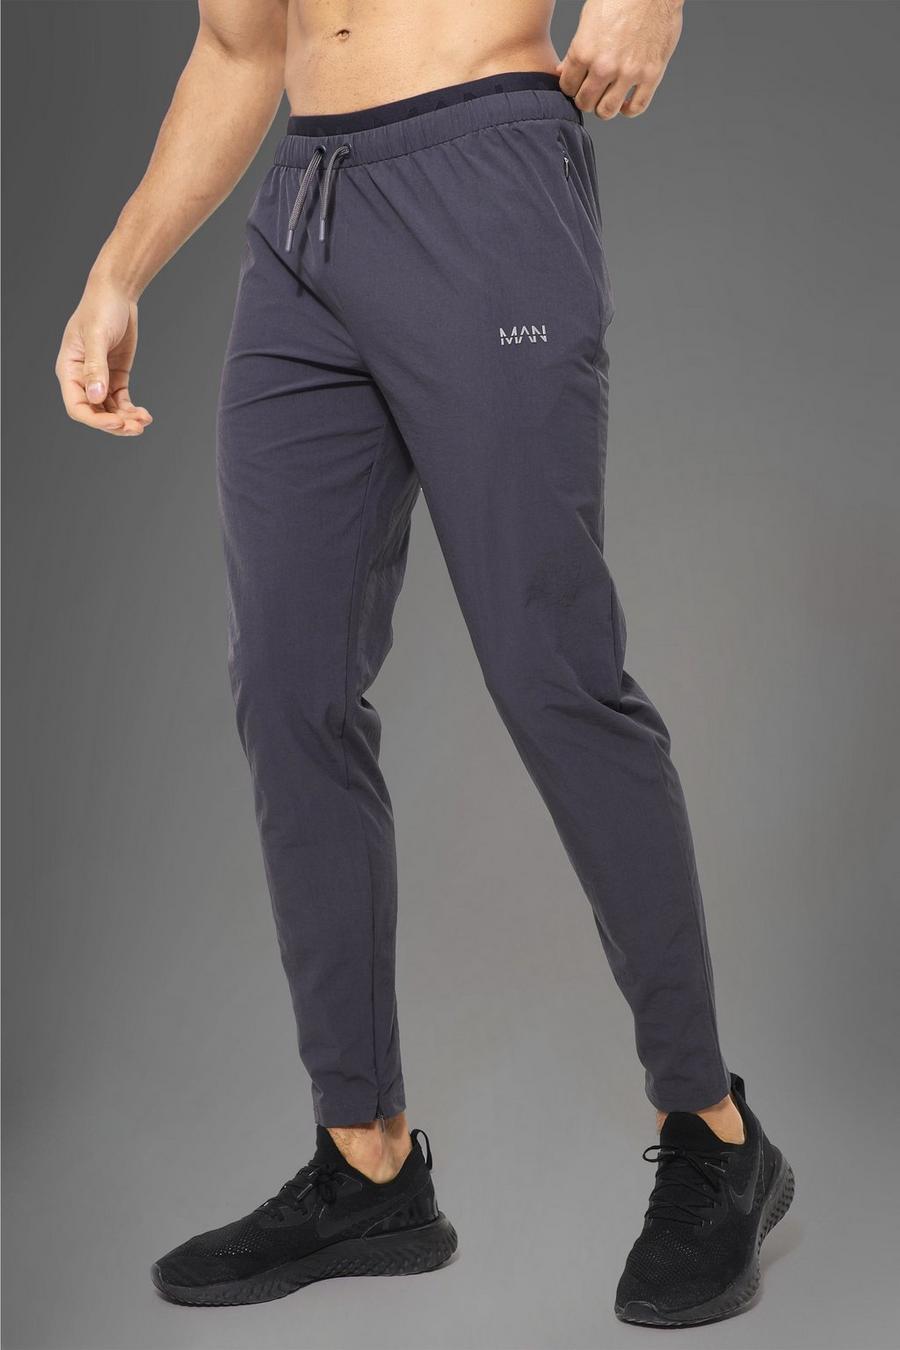 Pantaloni tuta Man Active Gym con dettagli in vita, Charcoal gris